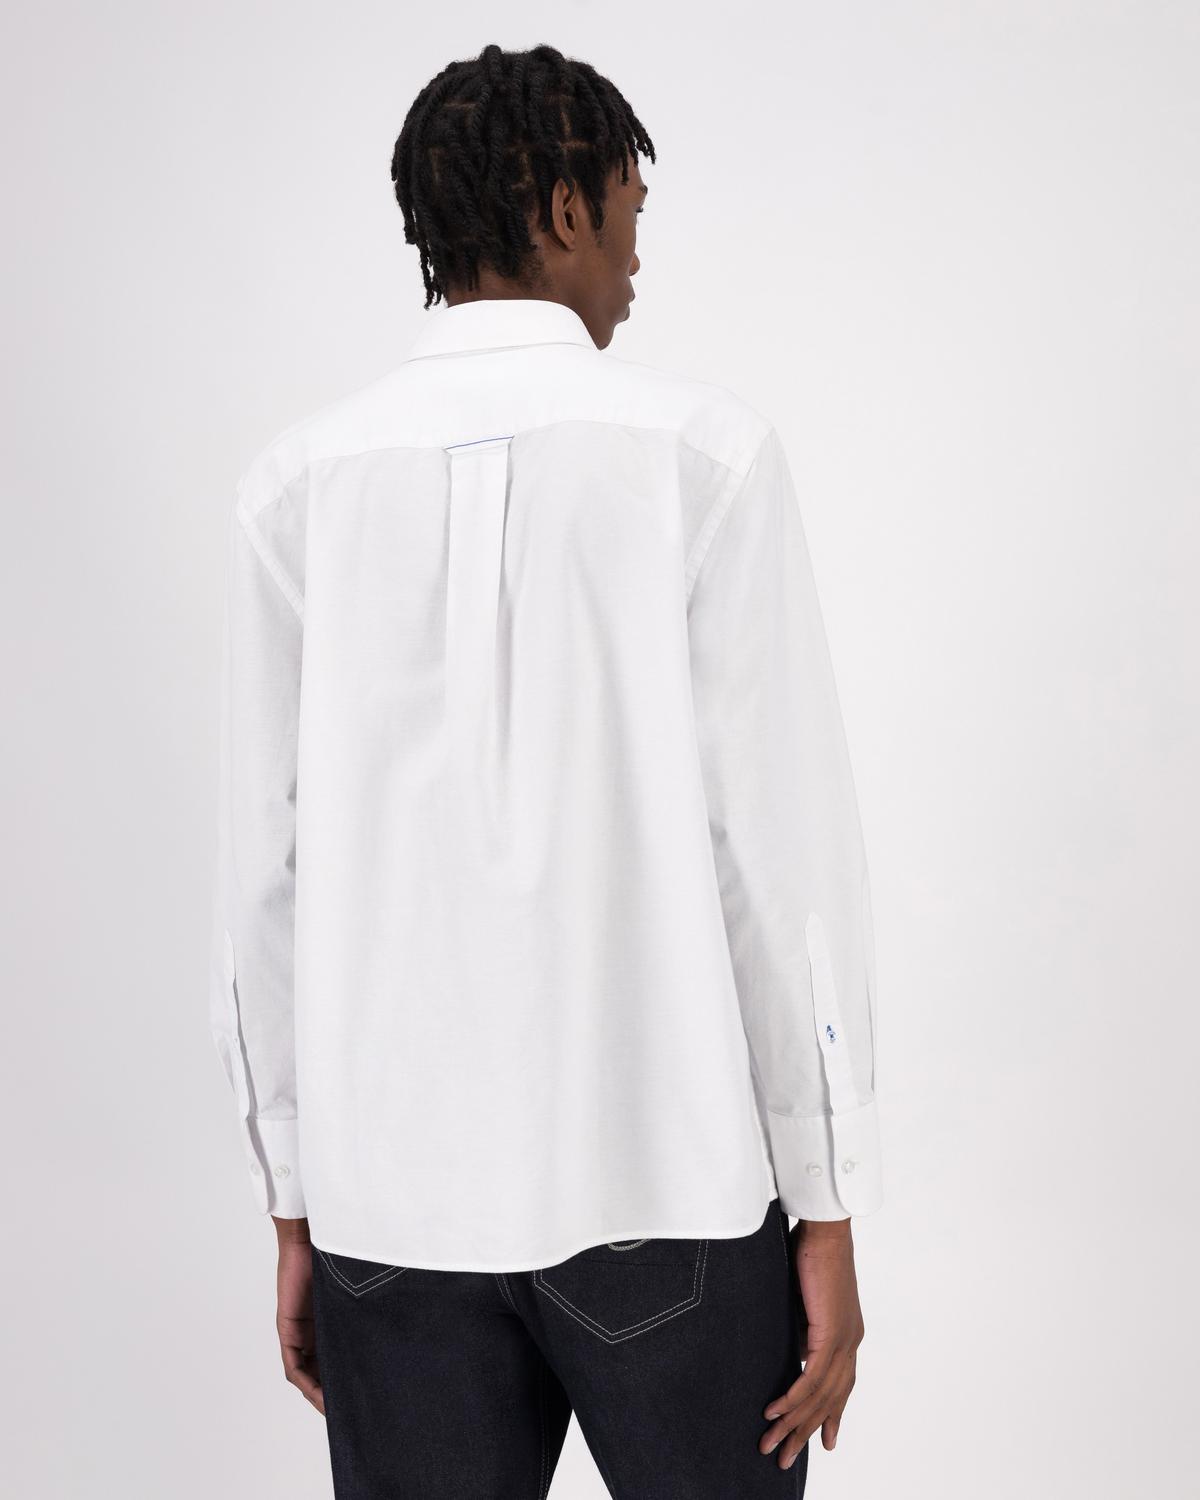 BROKE x Old Khaki Unisex White Shirt | Old Khaki